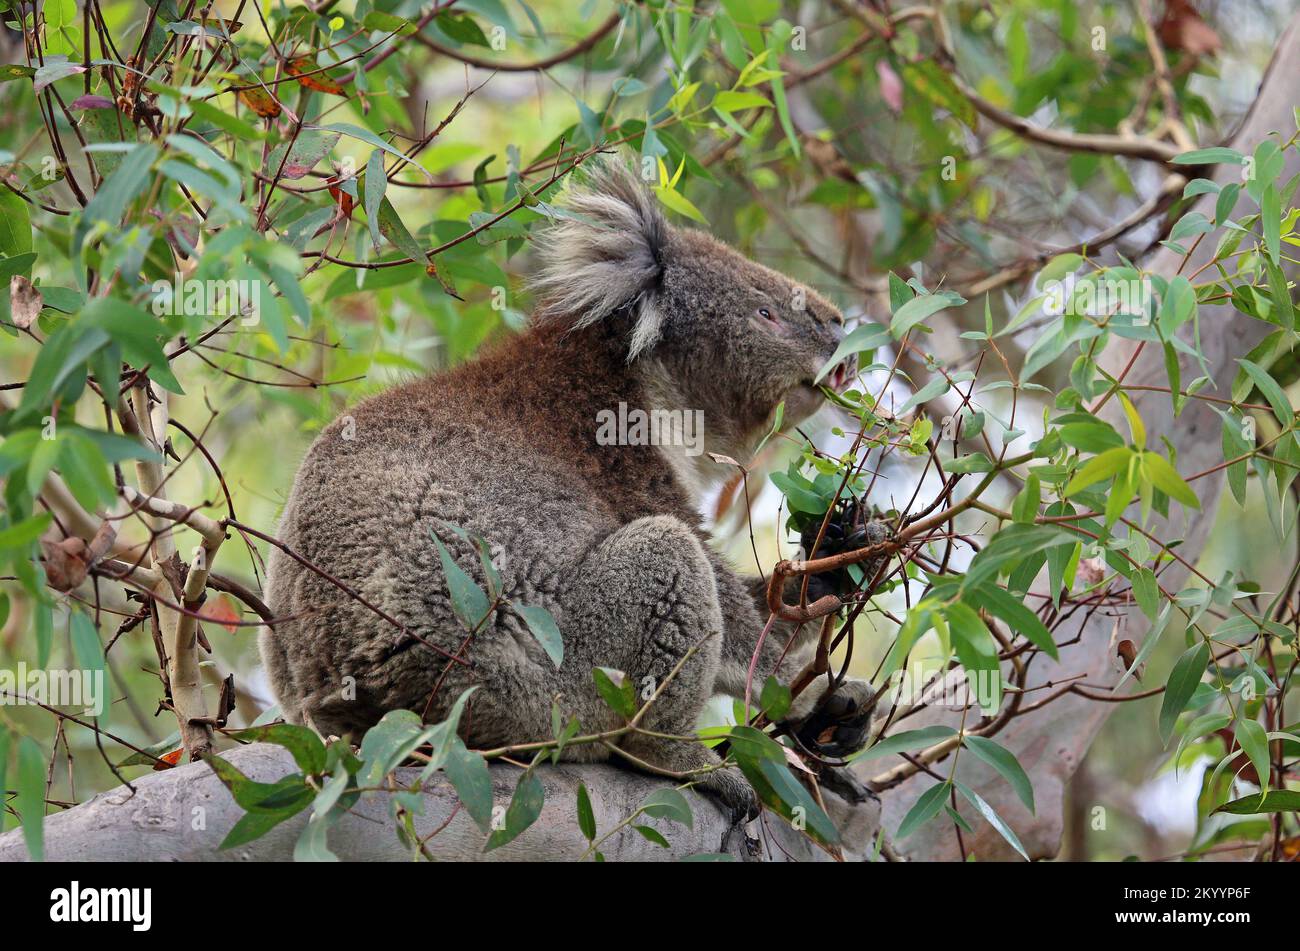 Koala eating close up - Australia Stock Photo